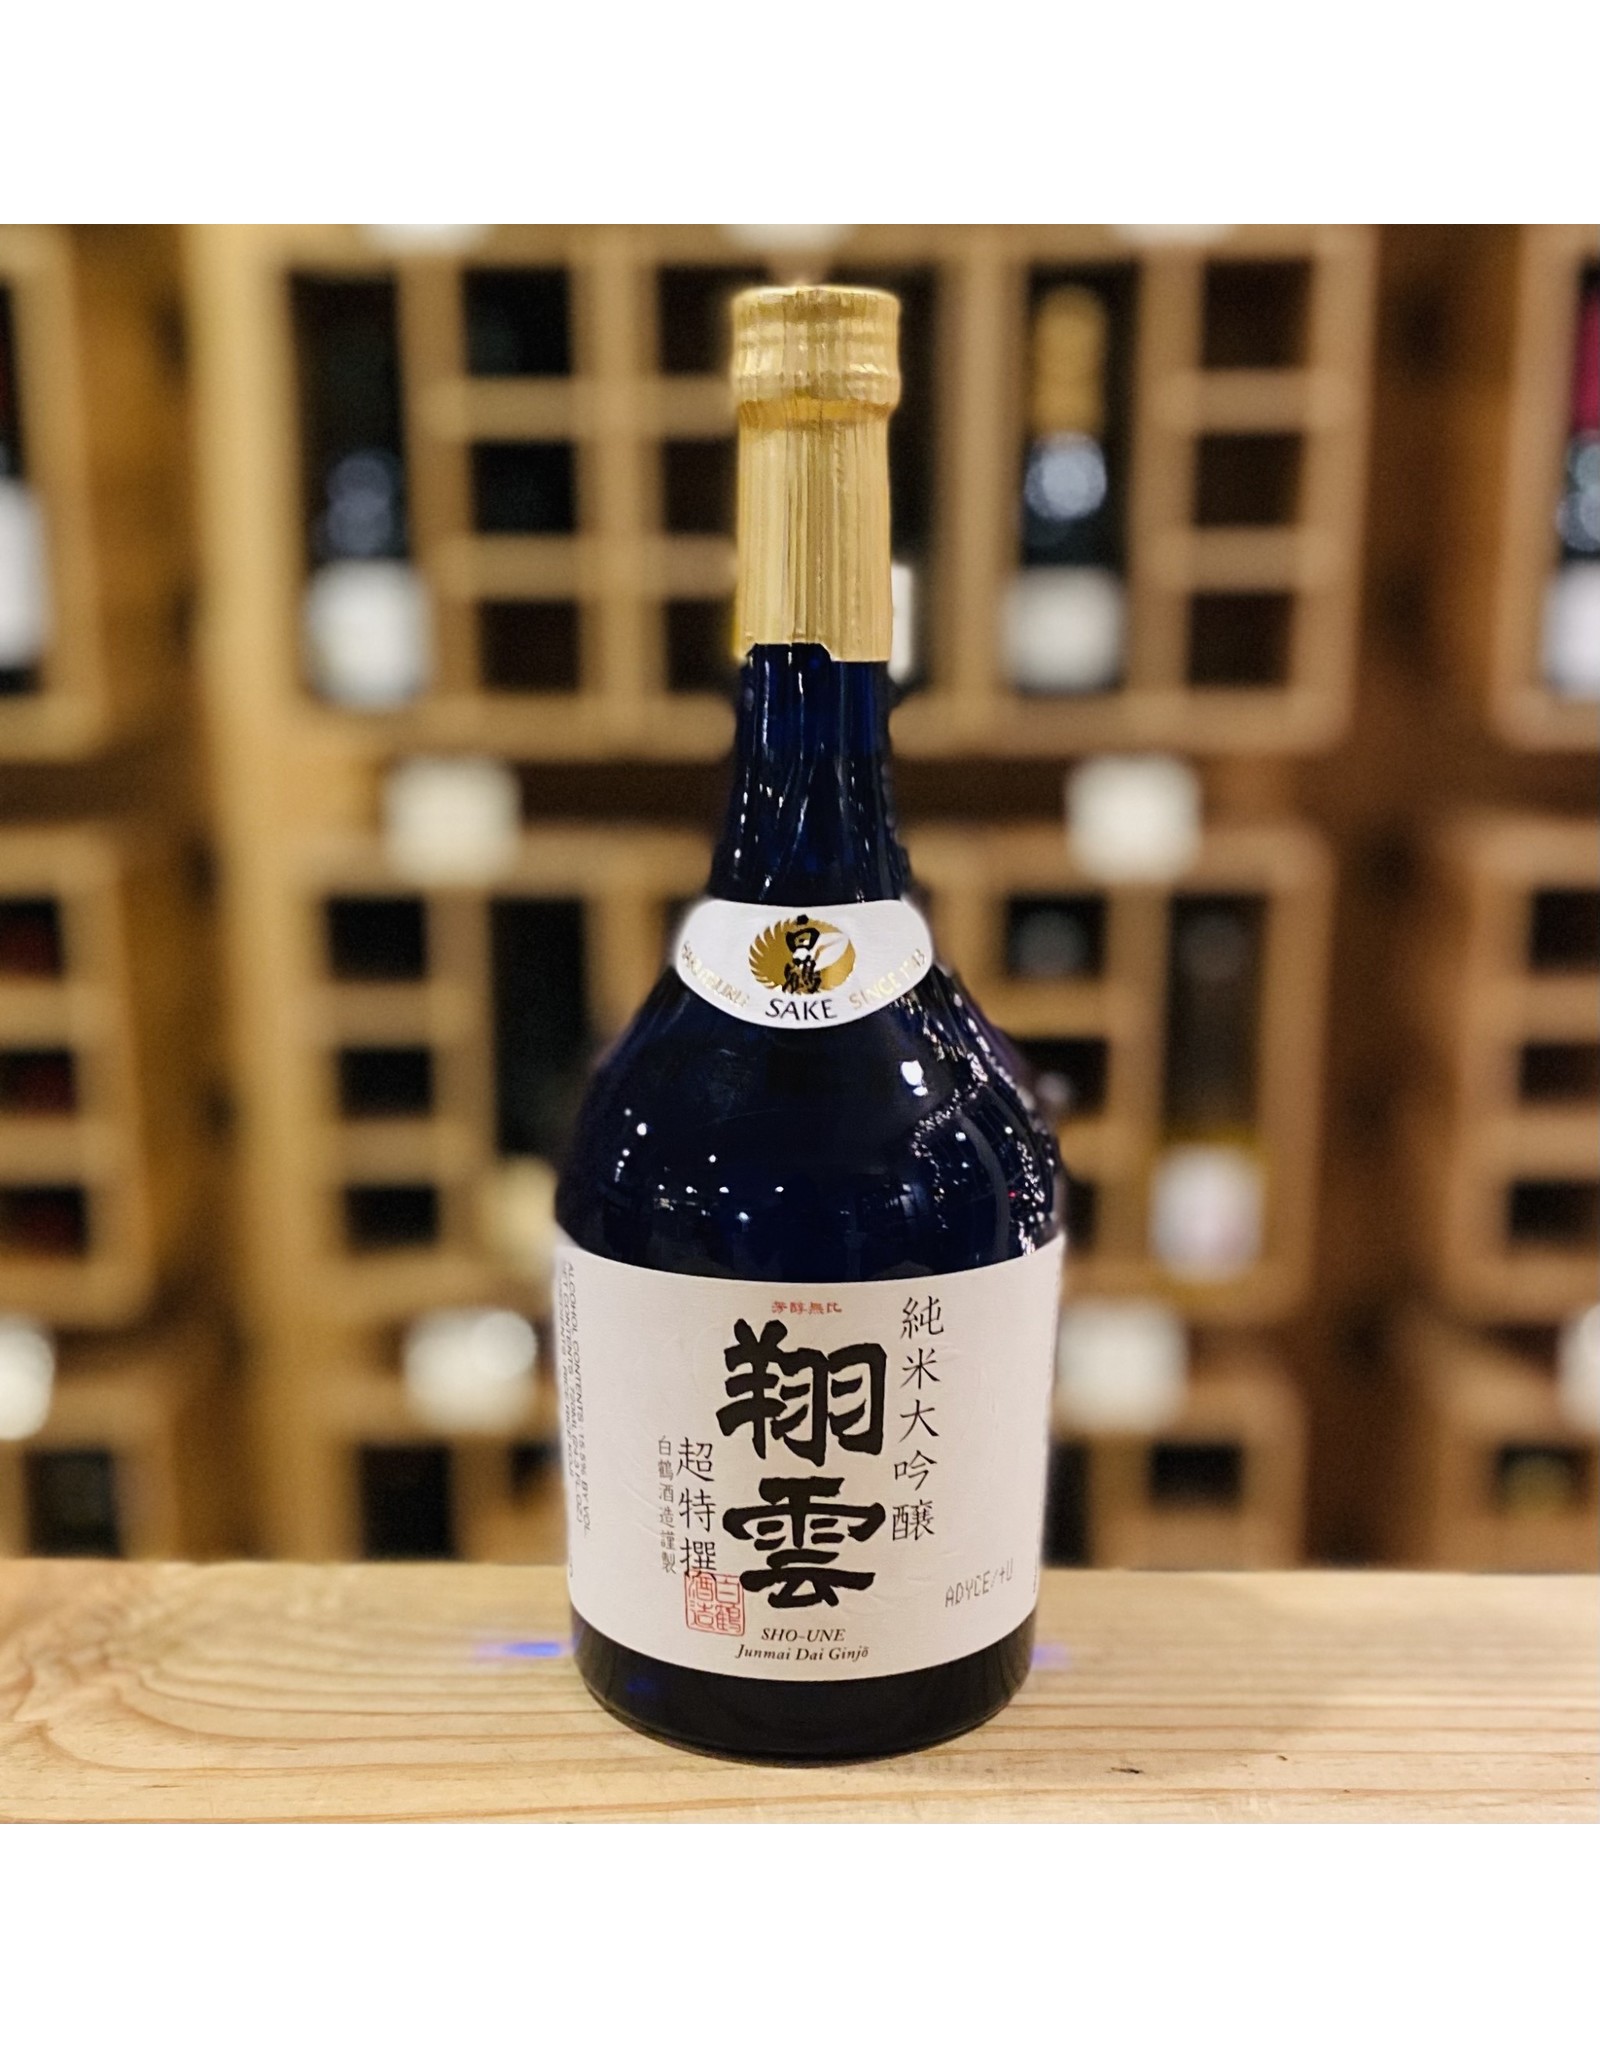 Hakutsuru Sake, Premium Sho-Une Junmai Daiginjo Sake 720ml - Kinki, Japan